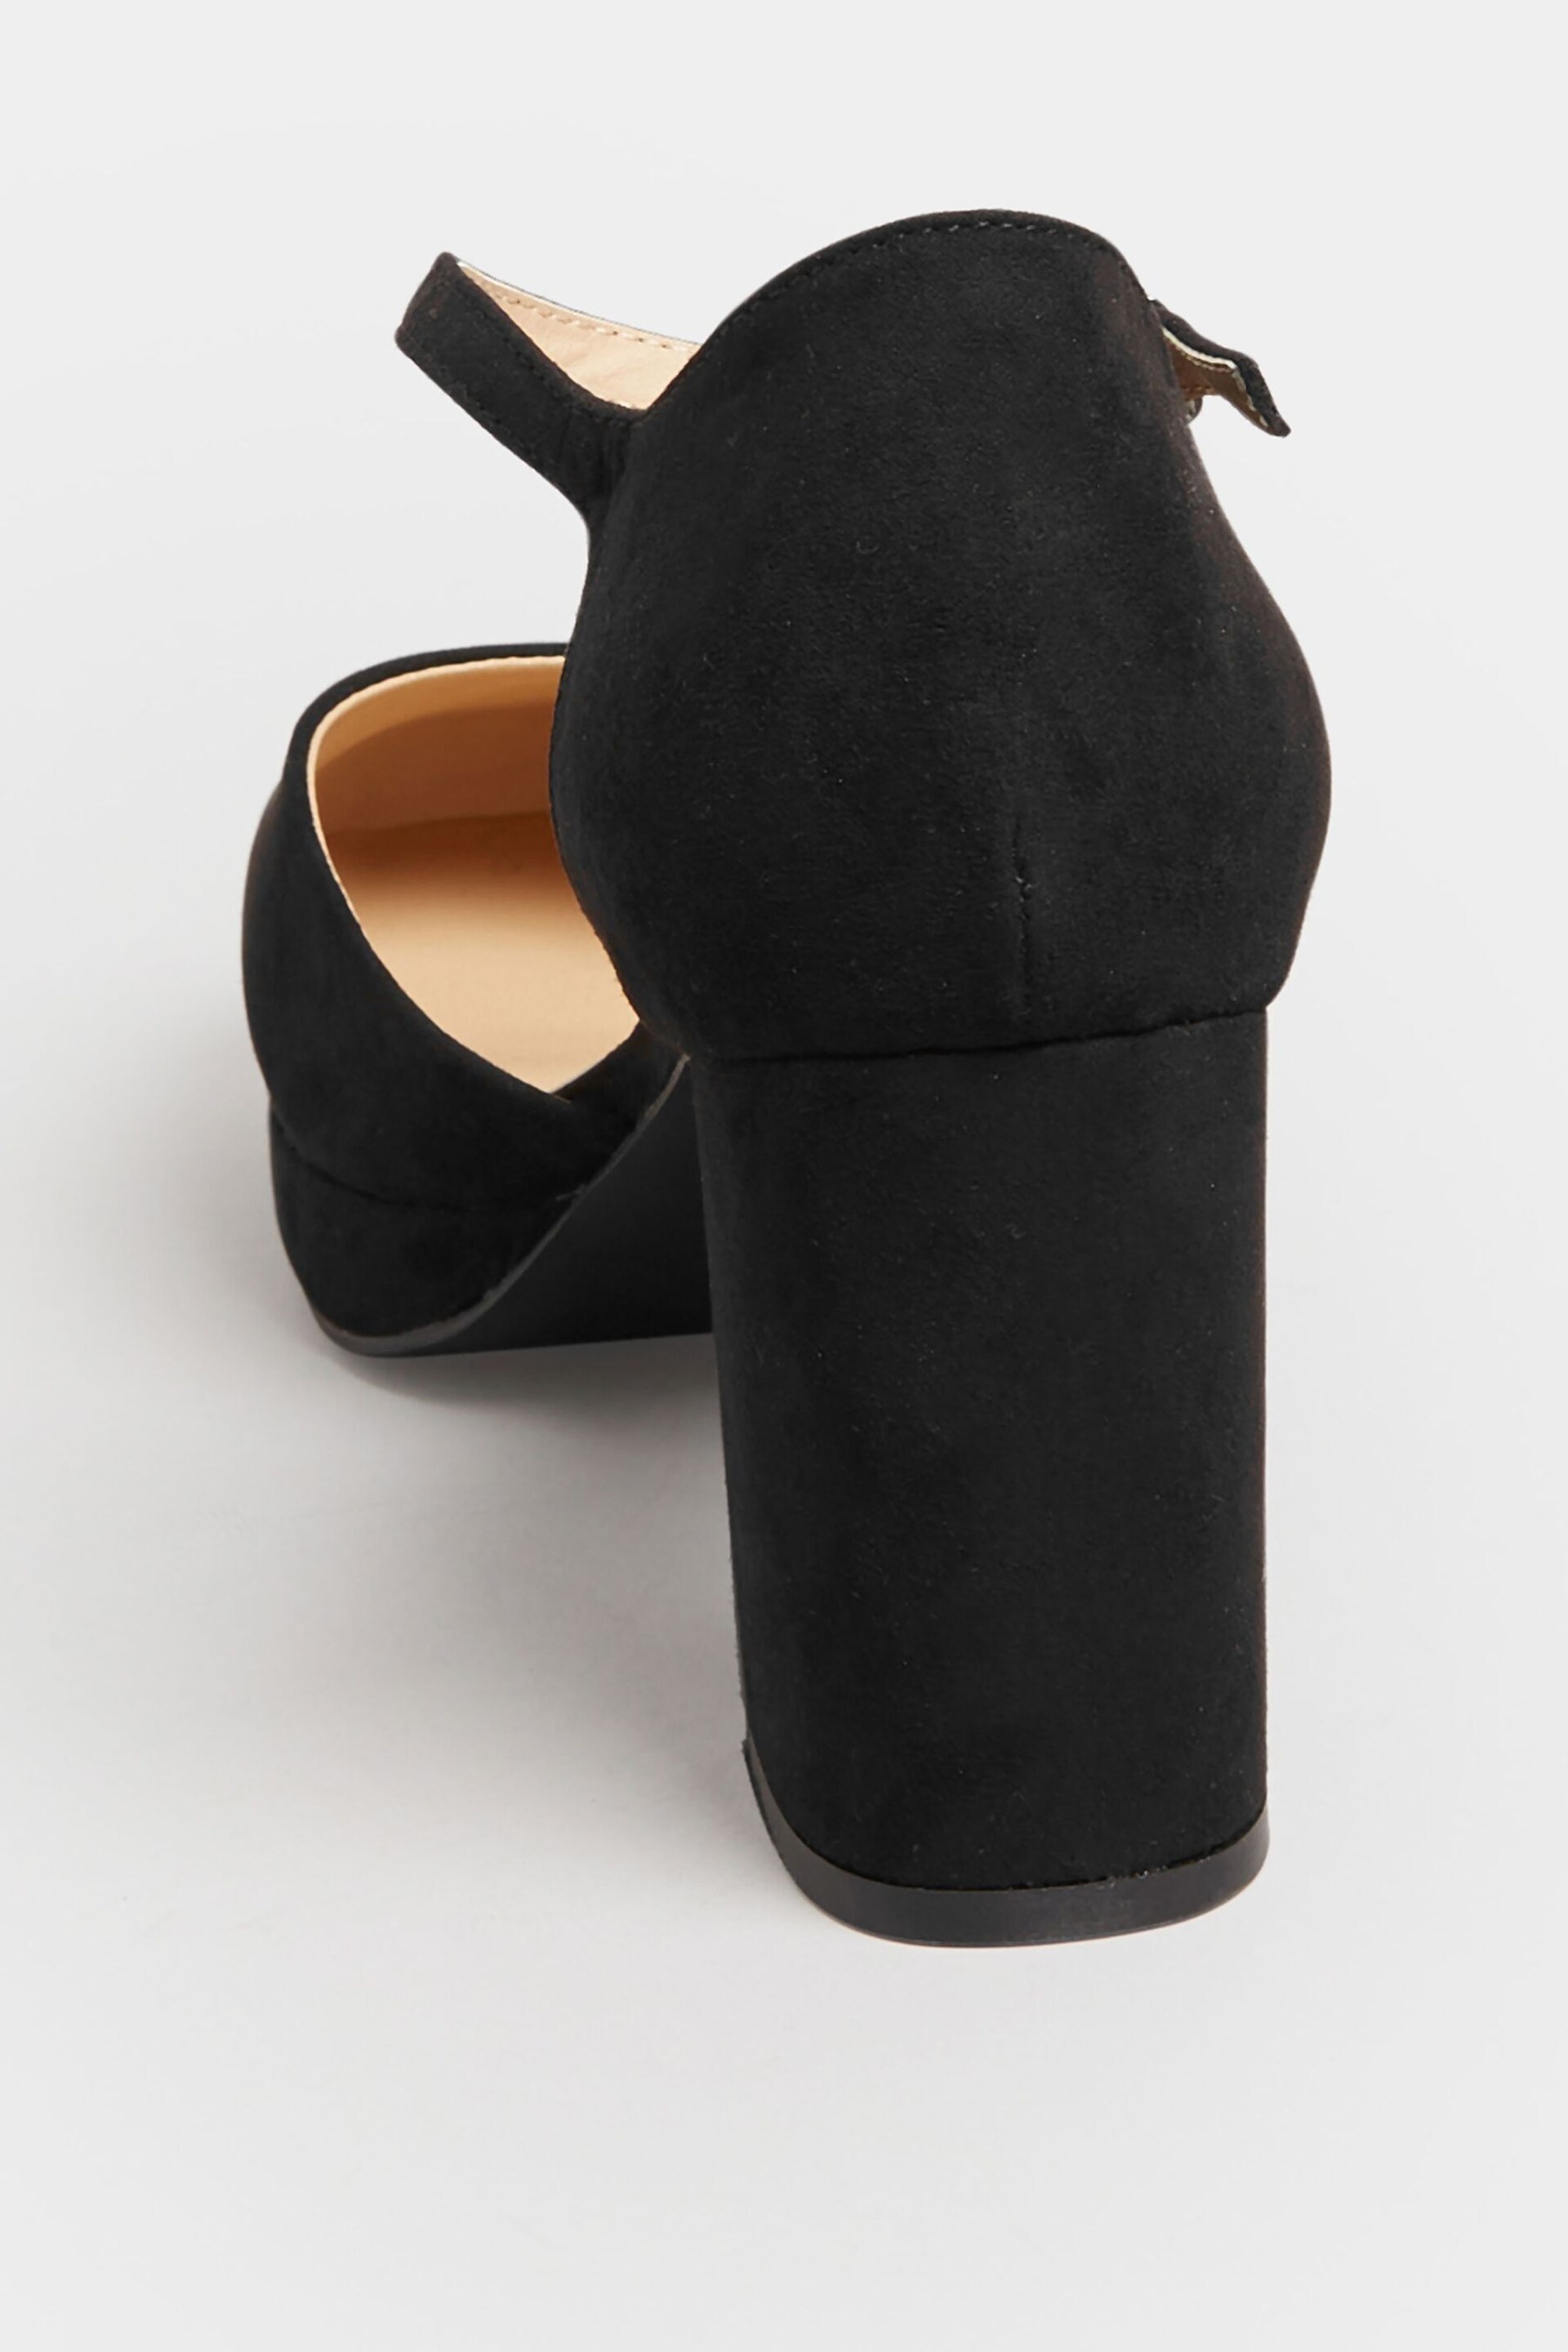 Yours Curve Black Extra-Wide Fit Platform Court Shoe - Image 4 of 5